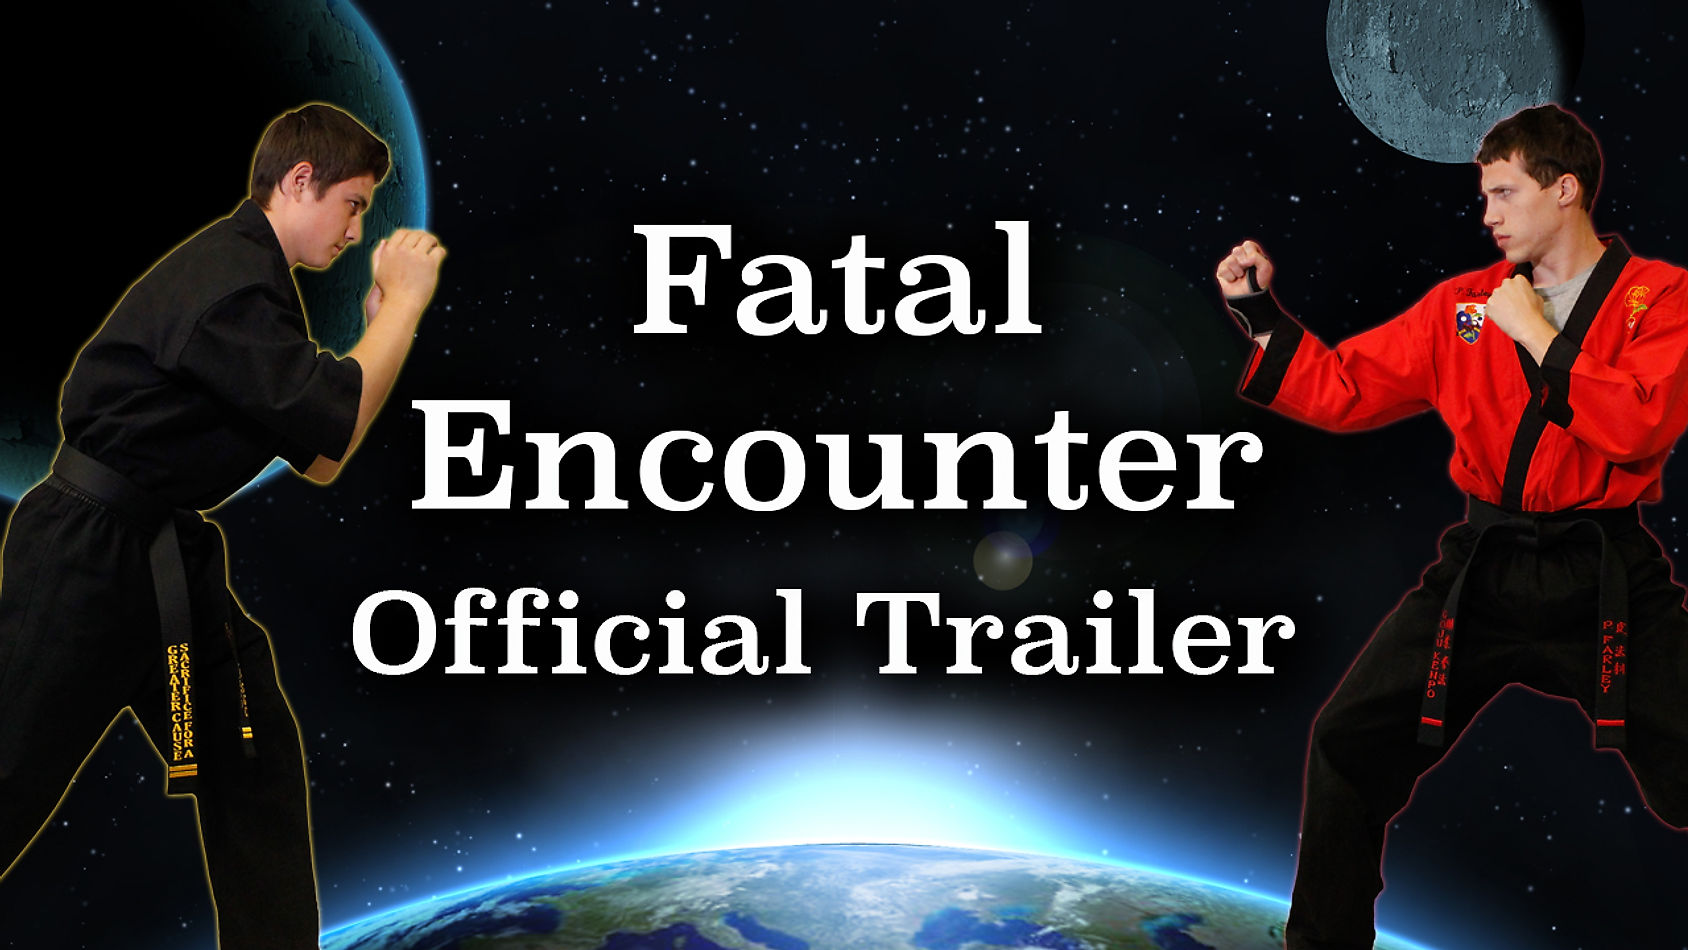 Fatal Encounter Official Trailer